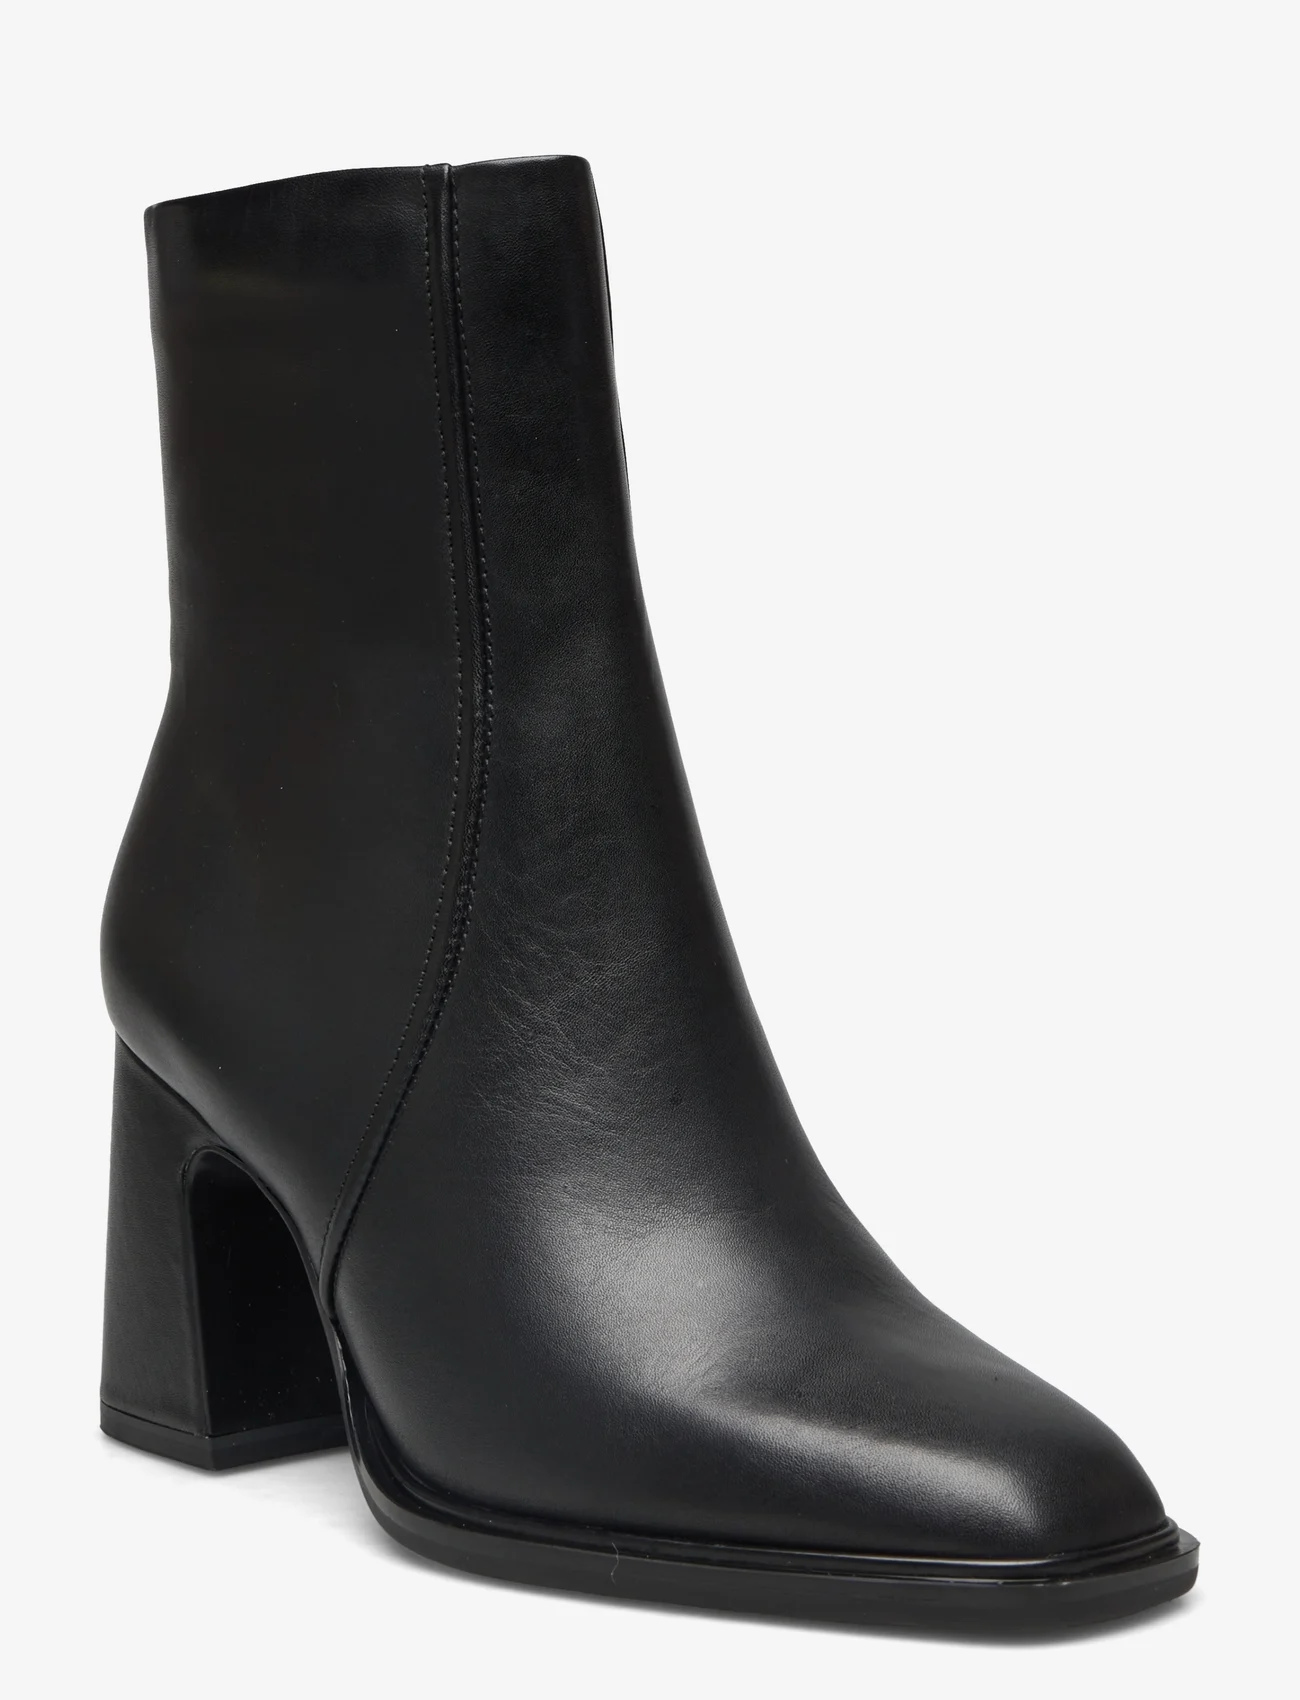 NEWD.Tamaris - Women Boots - hög klack - black - 0